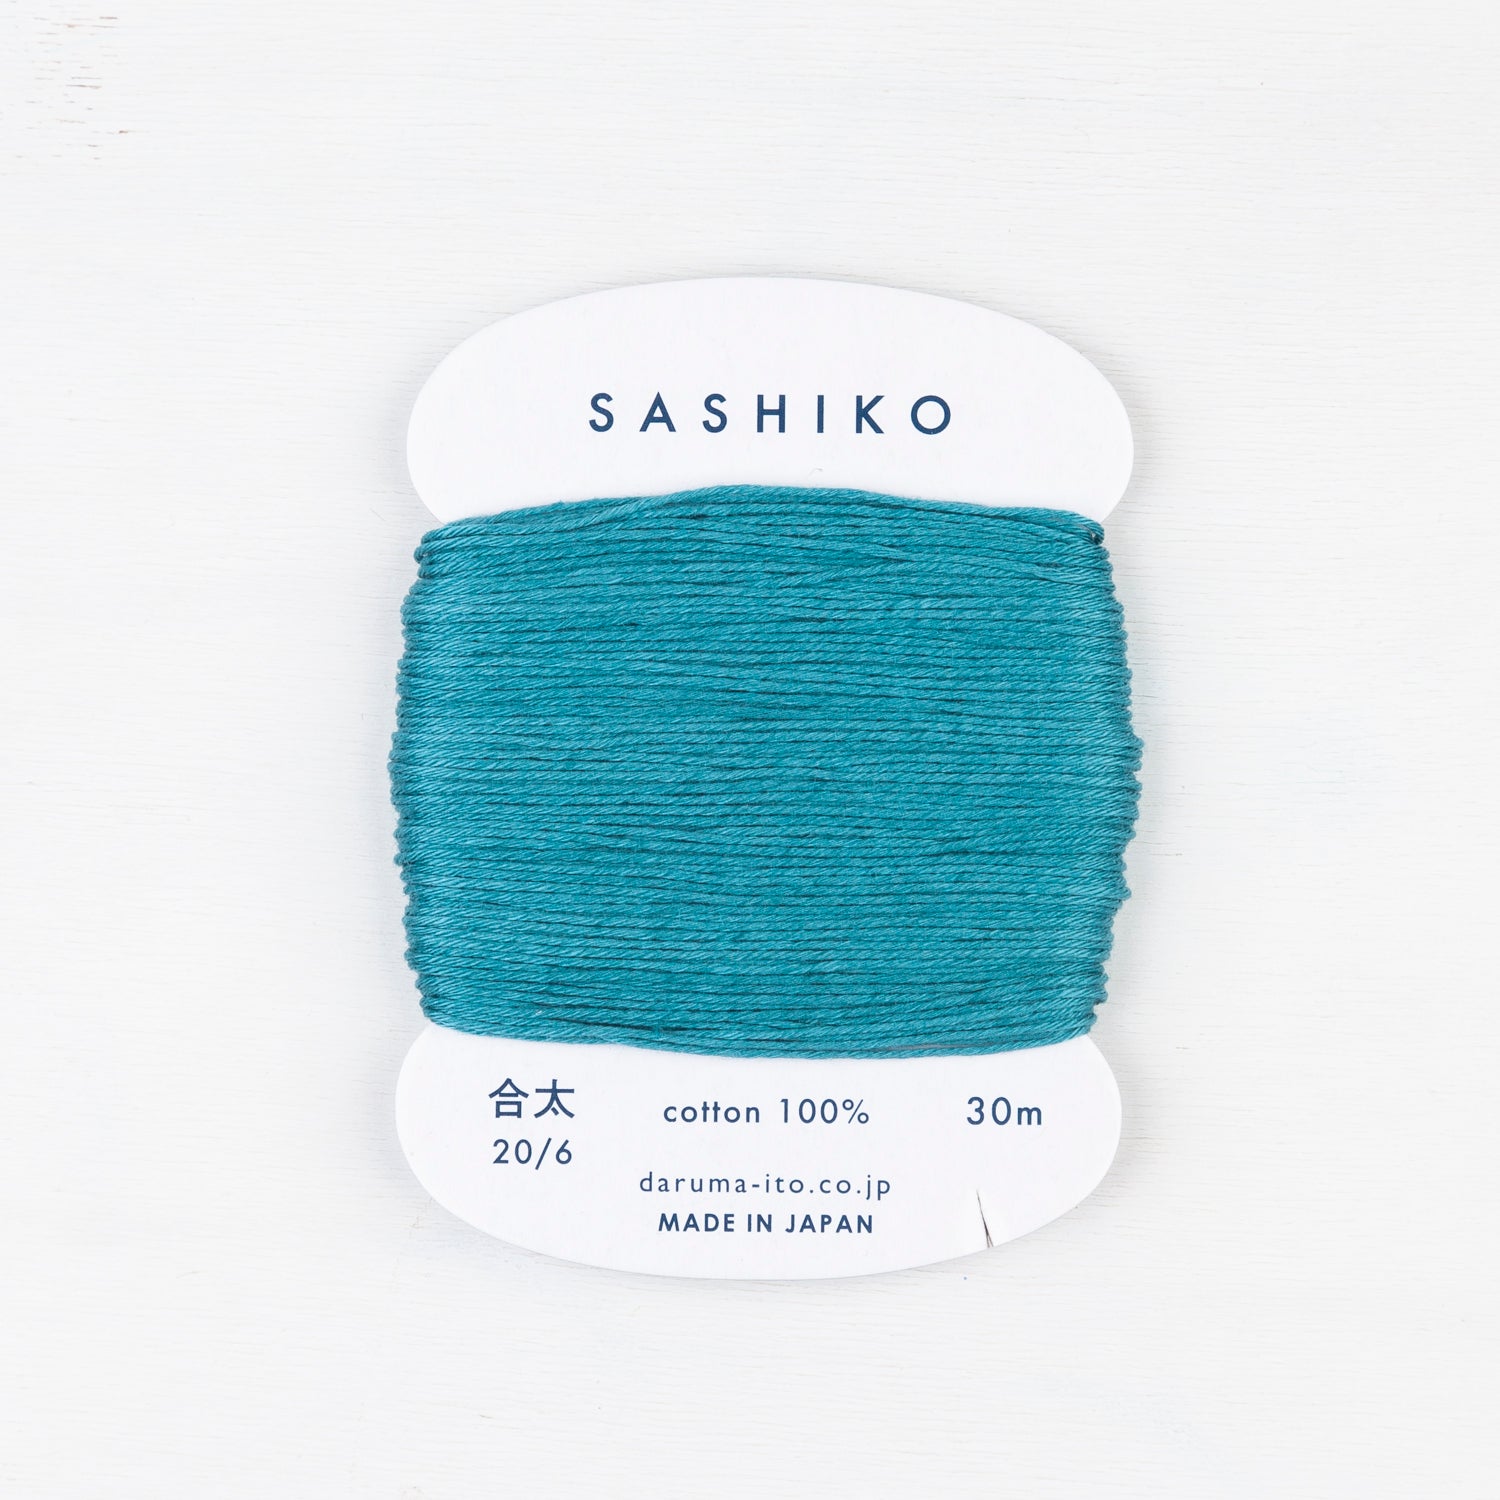 Choosing your sashiko thread